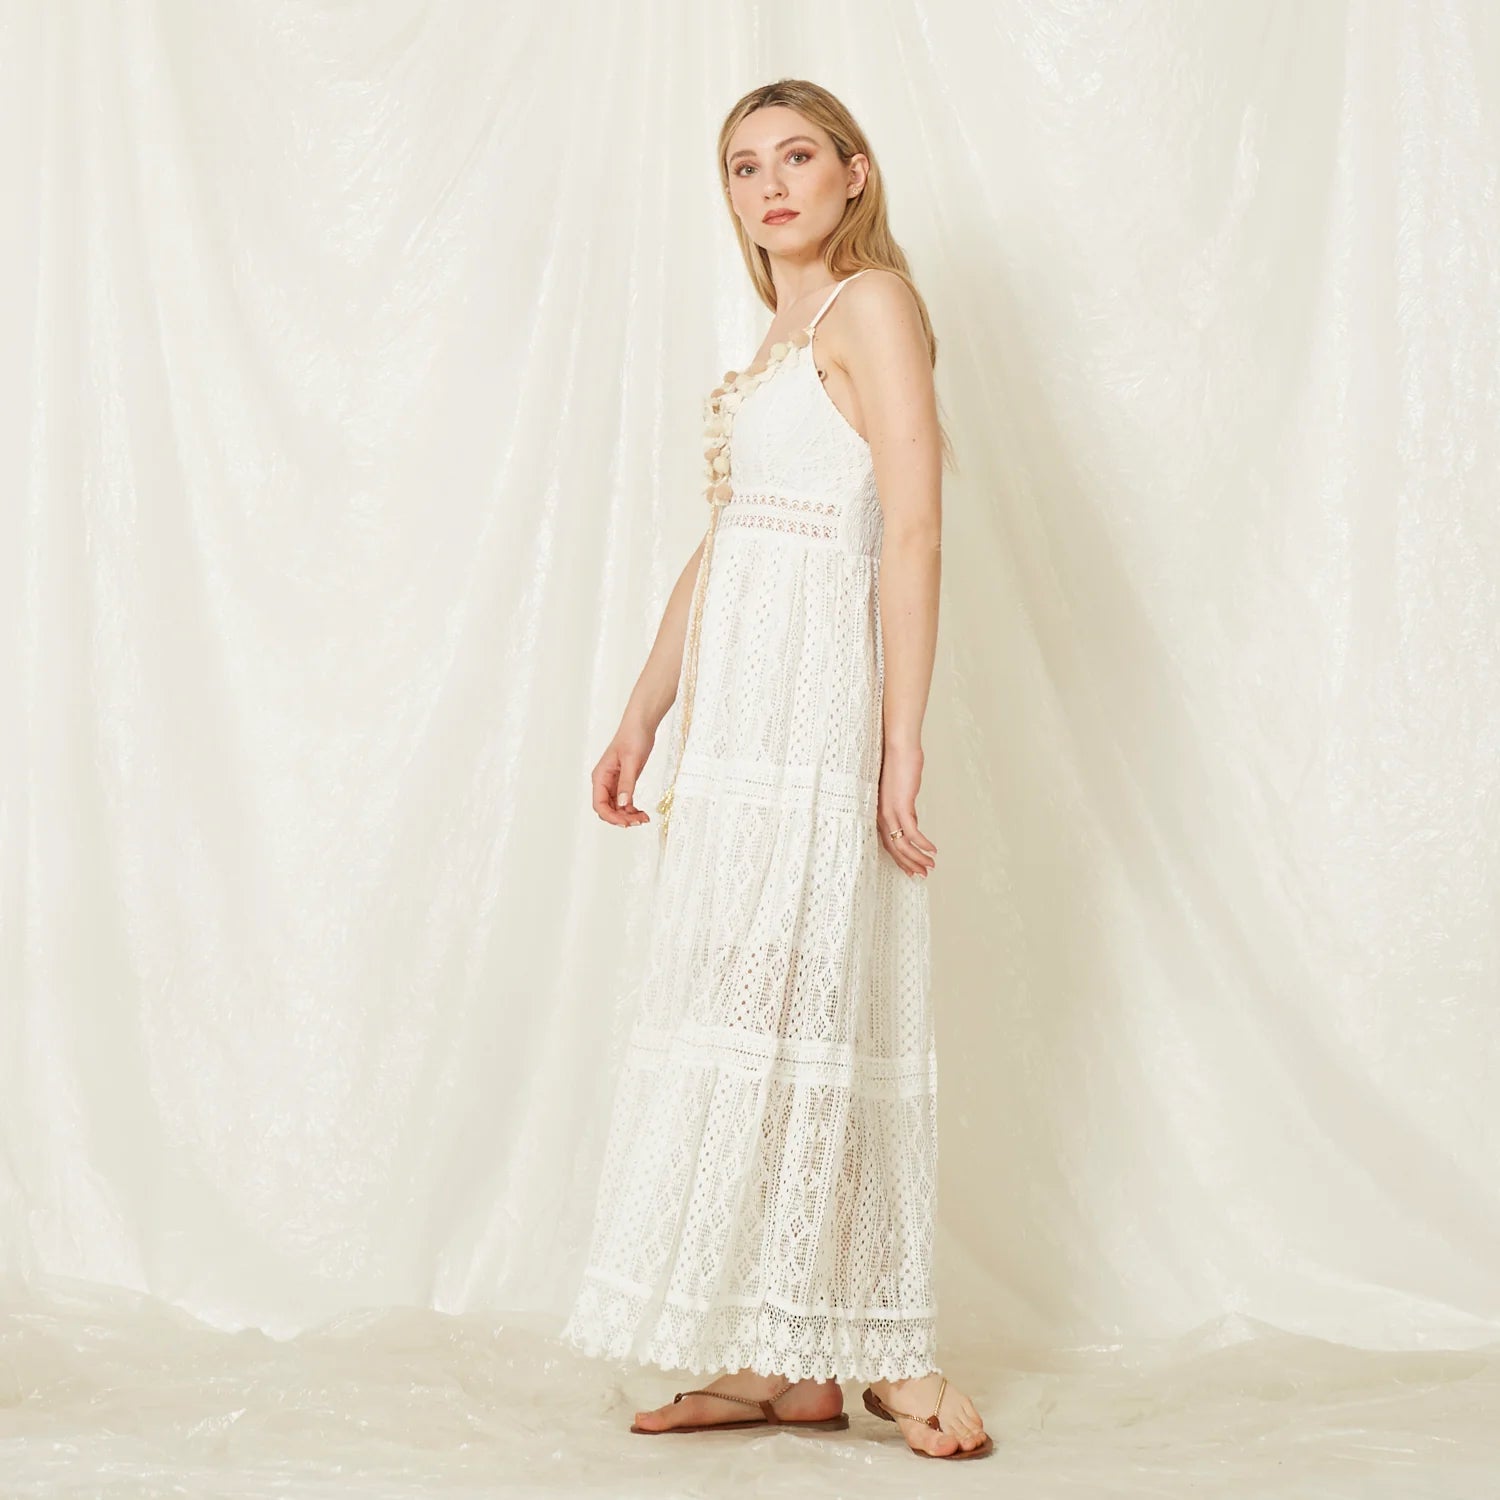 Do you white Dress Guardaroba Style